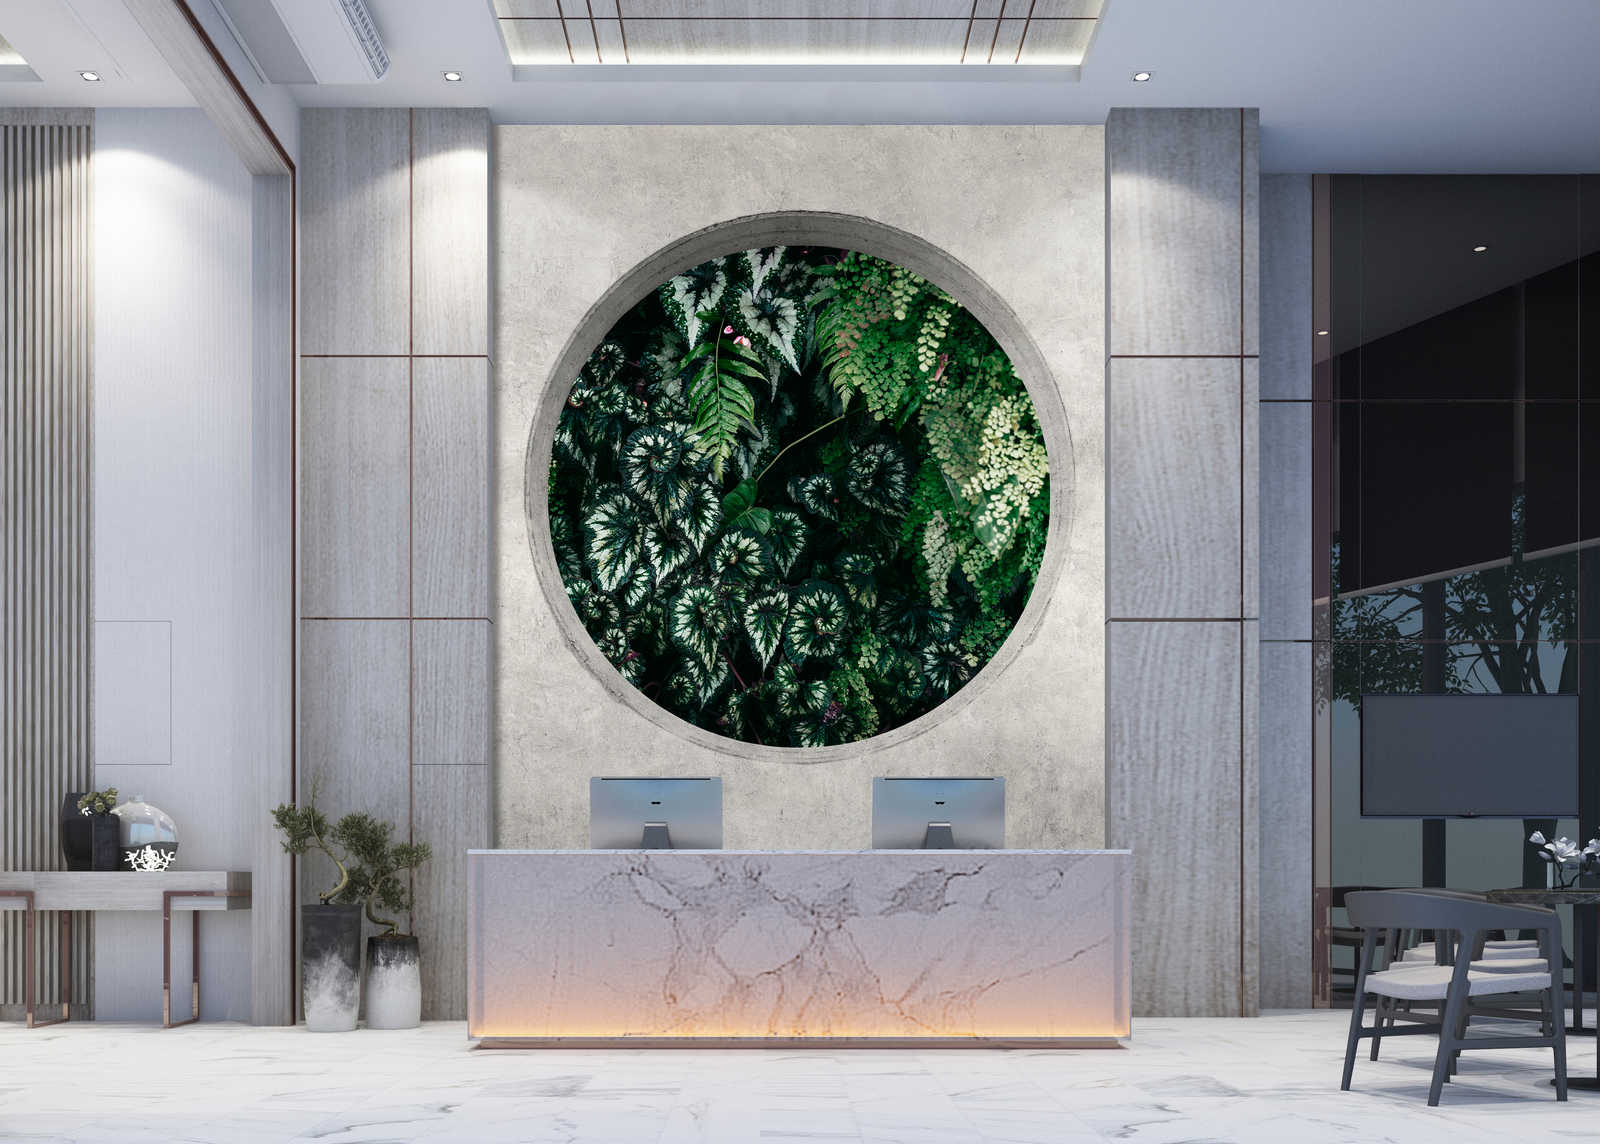             Deep Green 1 - Foto papel pintado ventana redonda con plantas de la selva
        